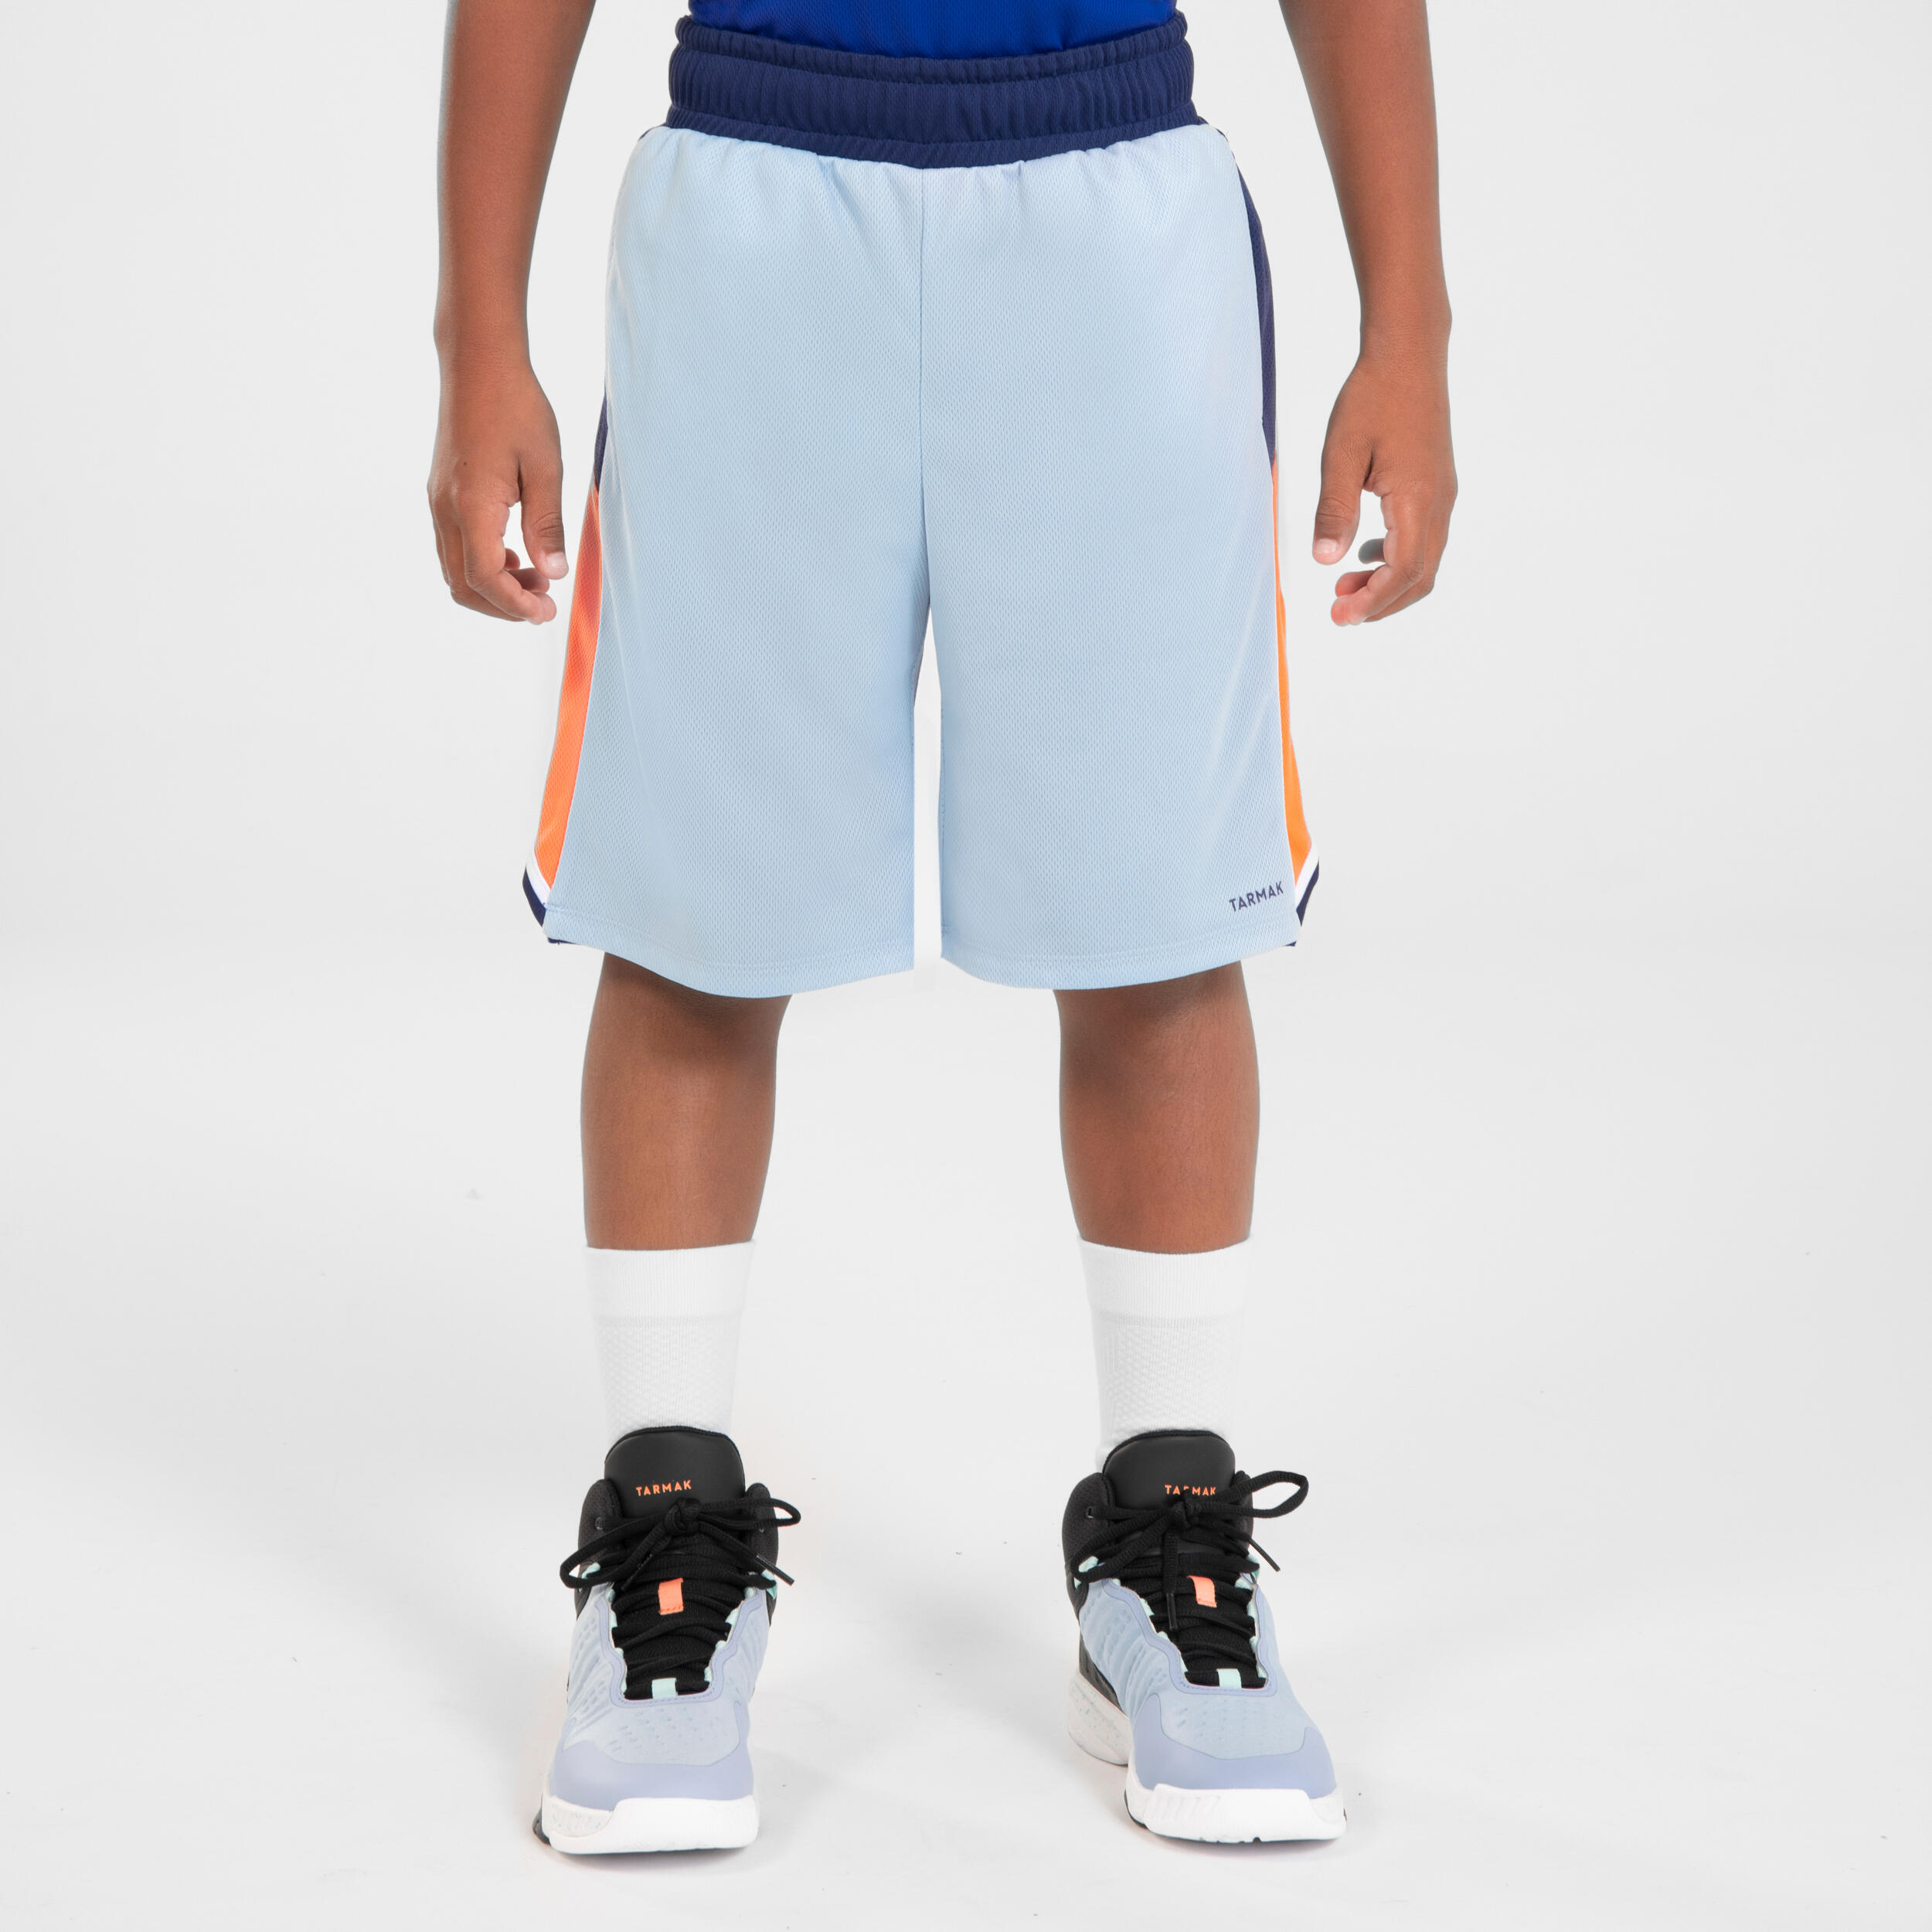 TARMAK Kids' Reversible Basketball Shorts SH500R - Light Blue/Navy